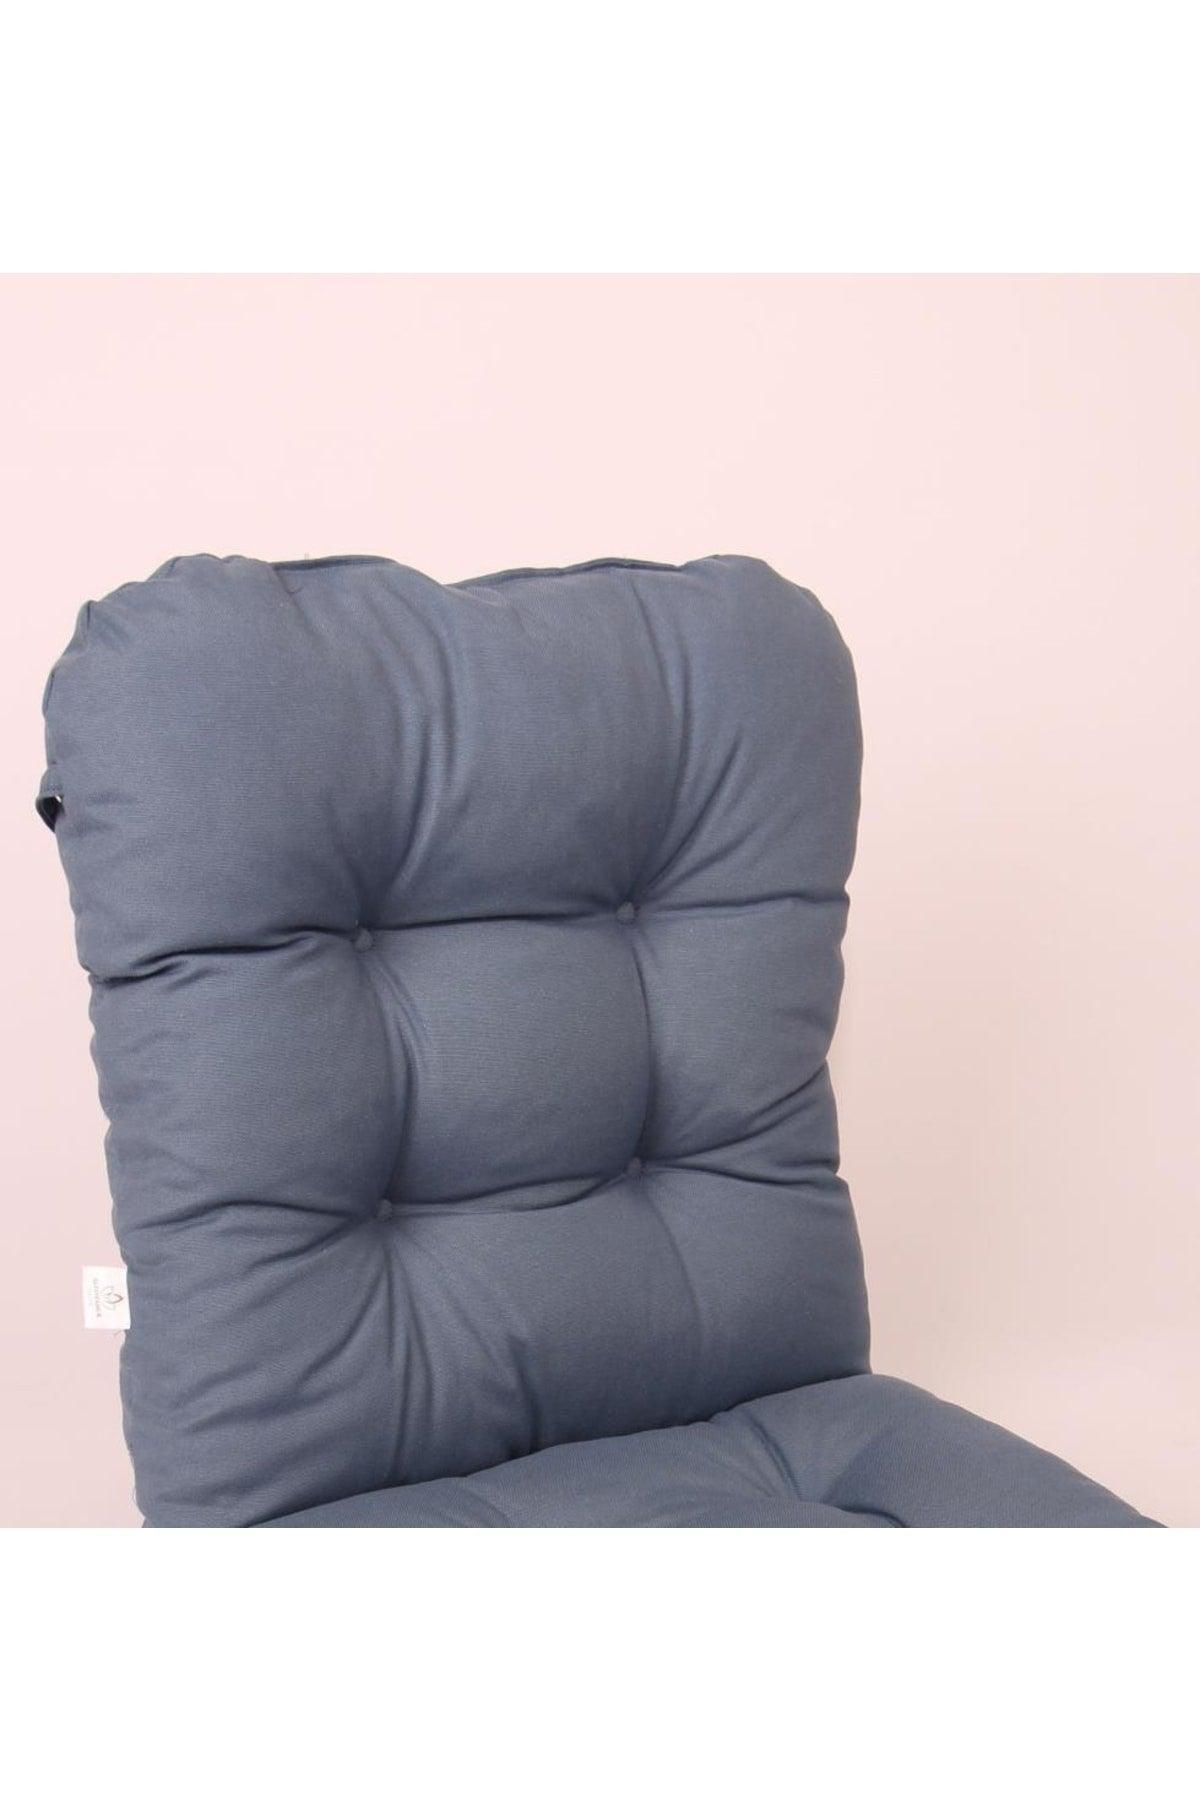 Neva Pofidik Petrol Backed Chair Cushion Specially Stitched Laced 44x94 Cm - Swordslife